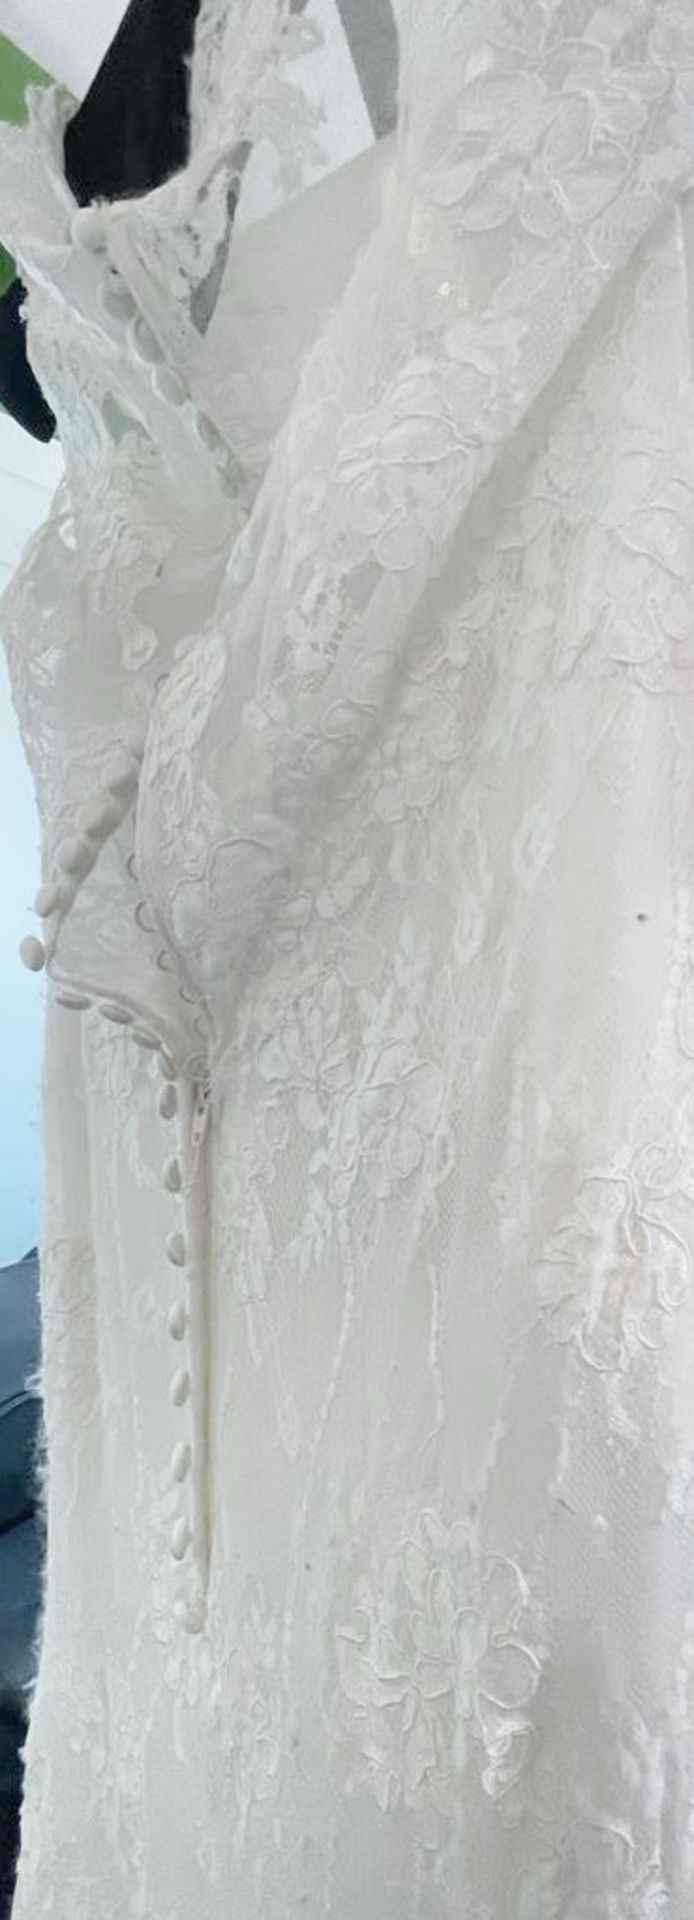 1 x DIANE LEGRAND Designer Fishtail Wedding Dress Bridal Gown - Style: 7209 - Size: UK 10 - Original - Image 6 of 10